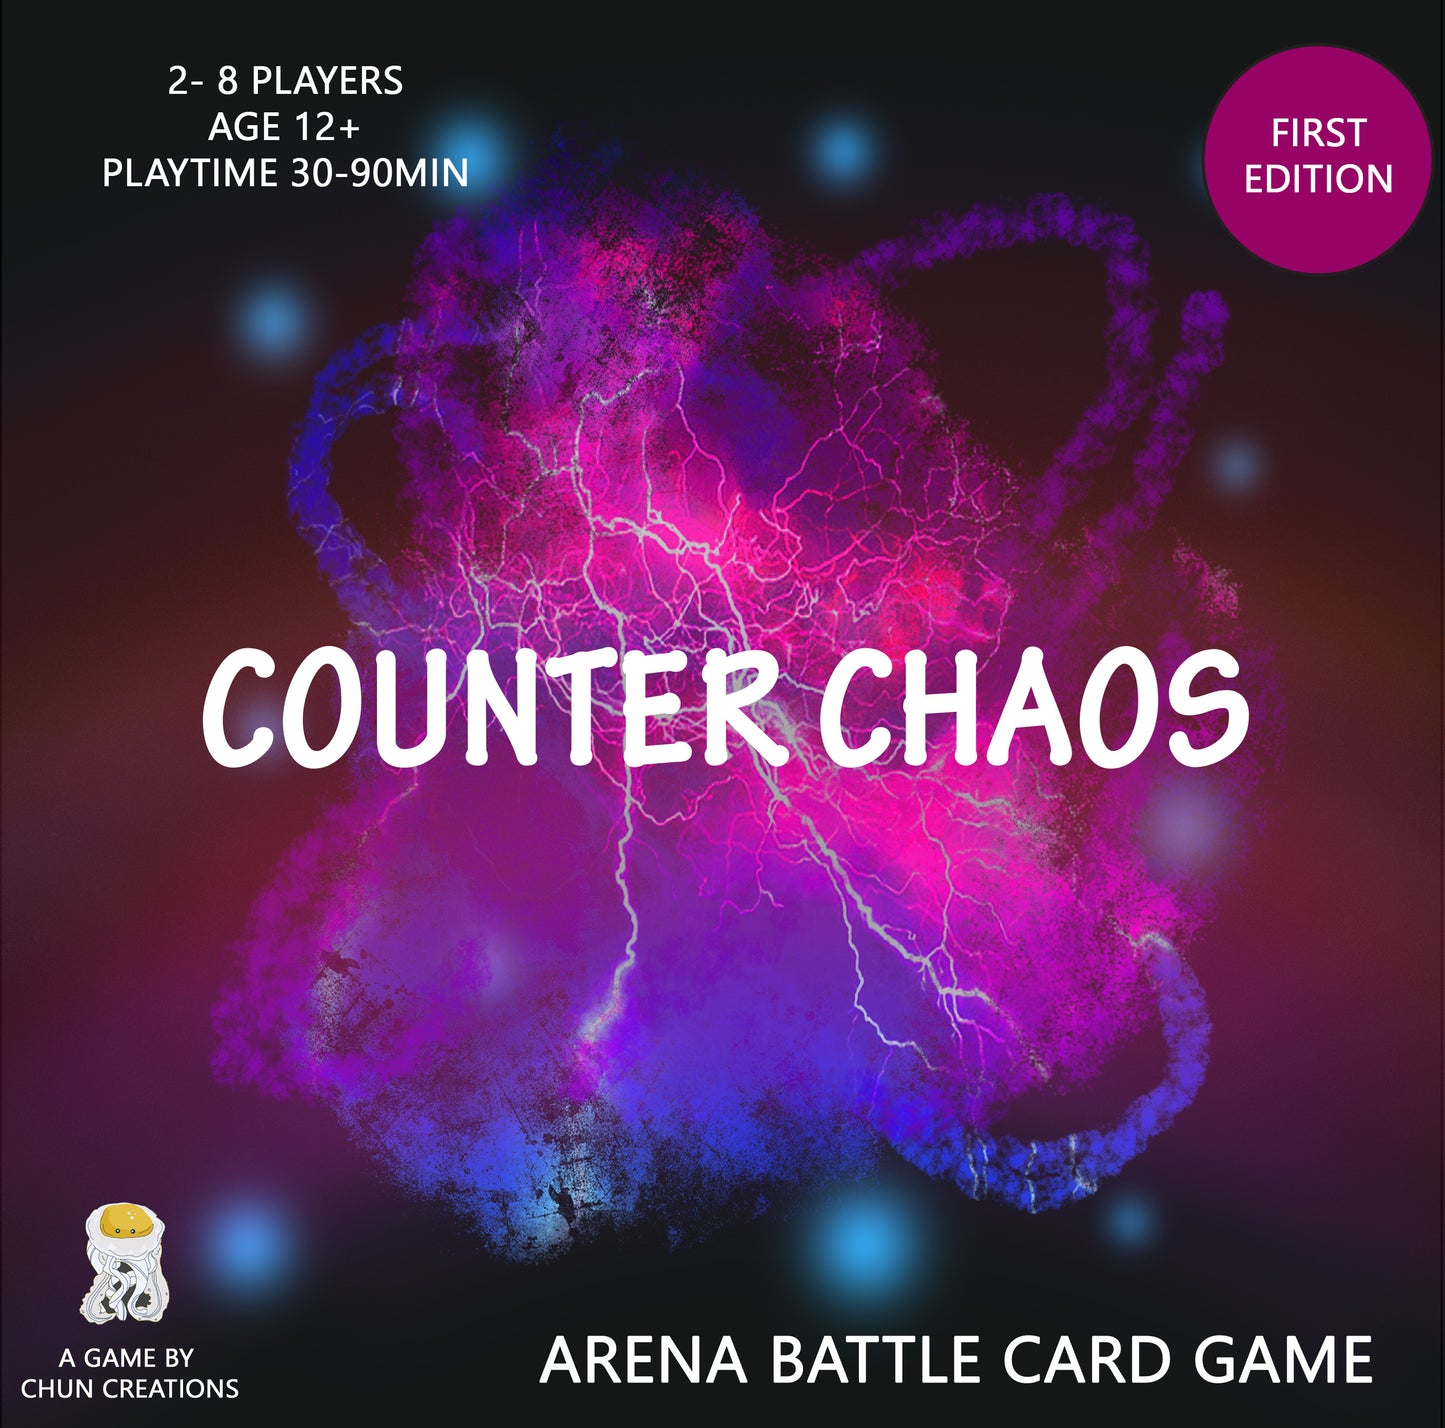 Counter Chaos: Arena Battle Card Game